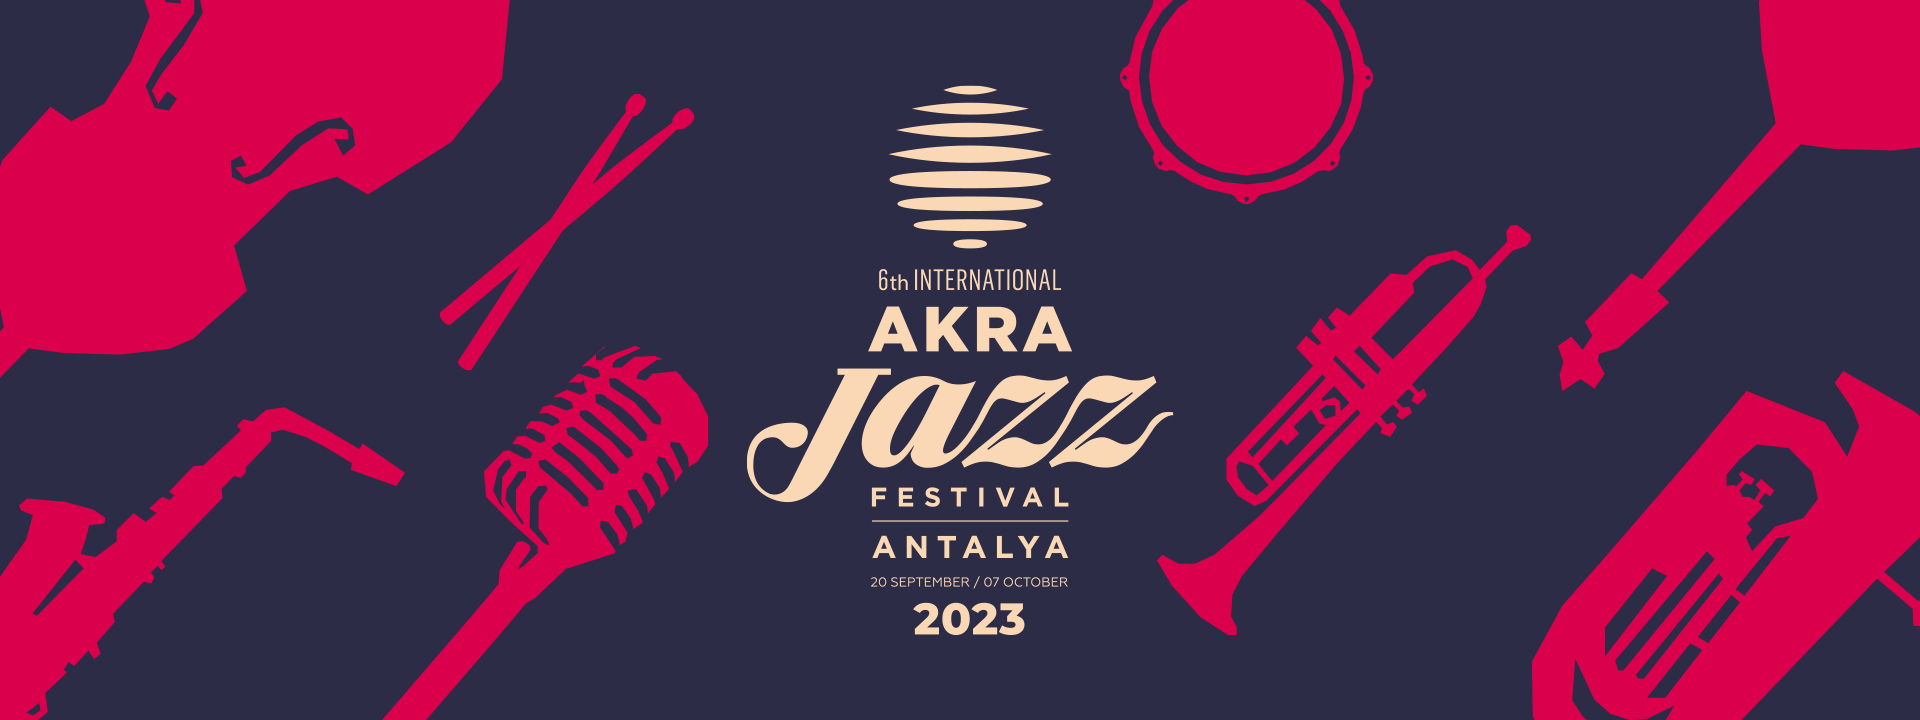 Akra Hotels Caz Festivali Banner En